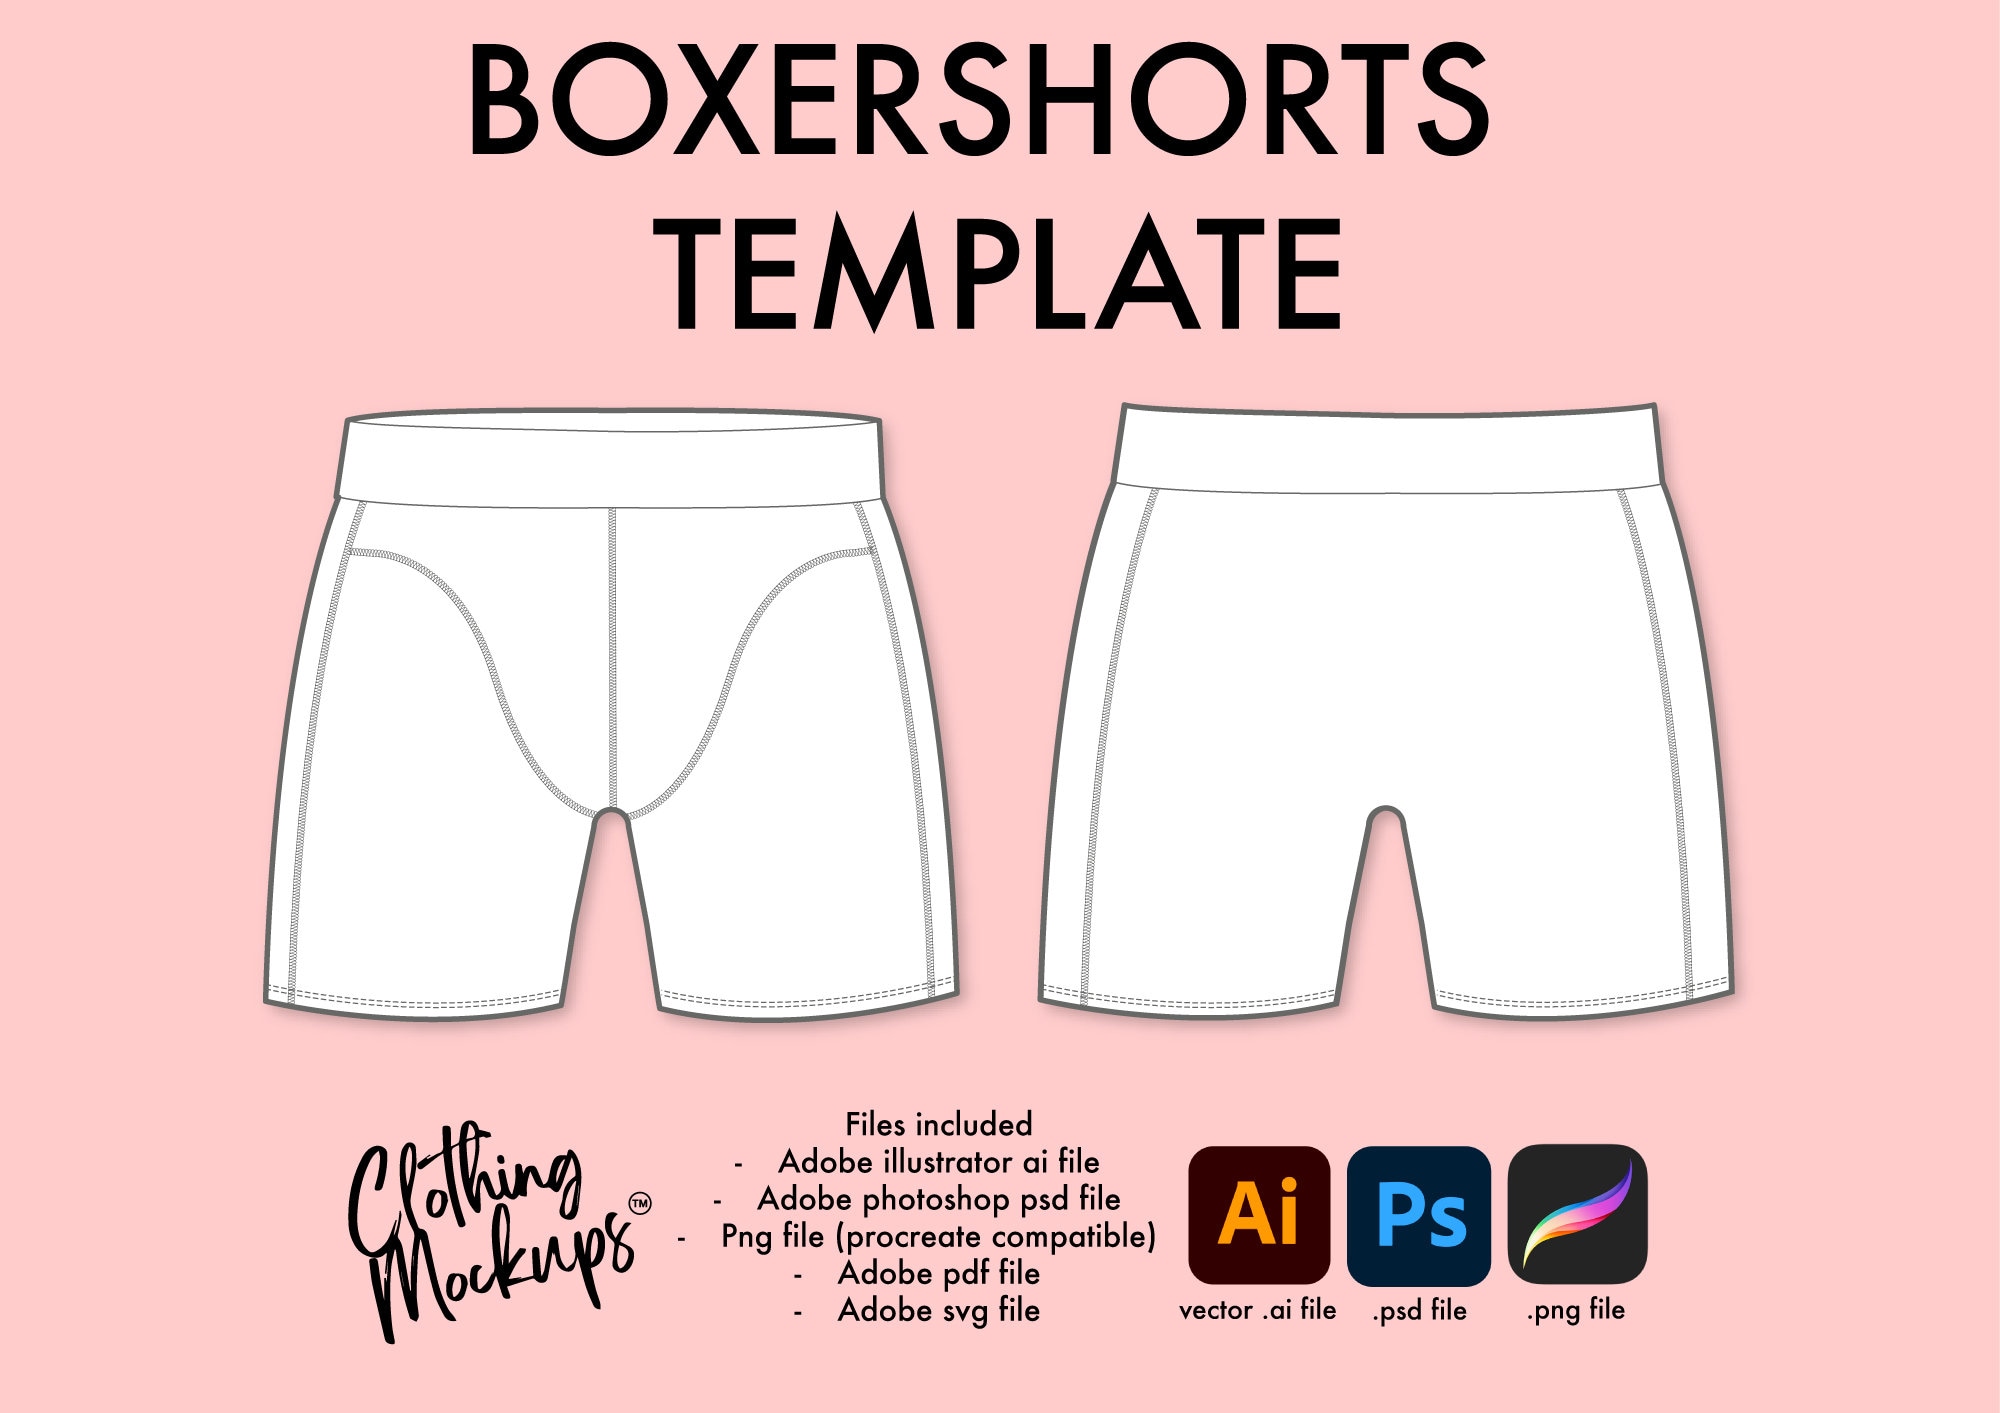 PSD Playboy Tie Dye Logo Boxer Men's Bottom Underwear (Refurbished